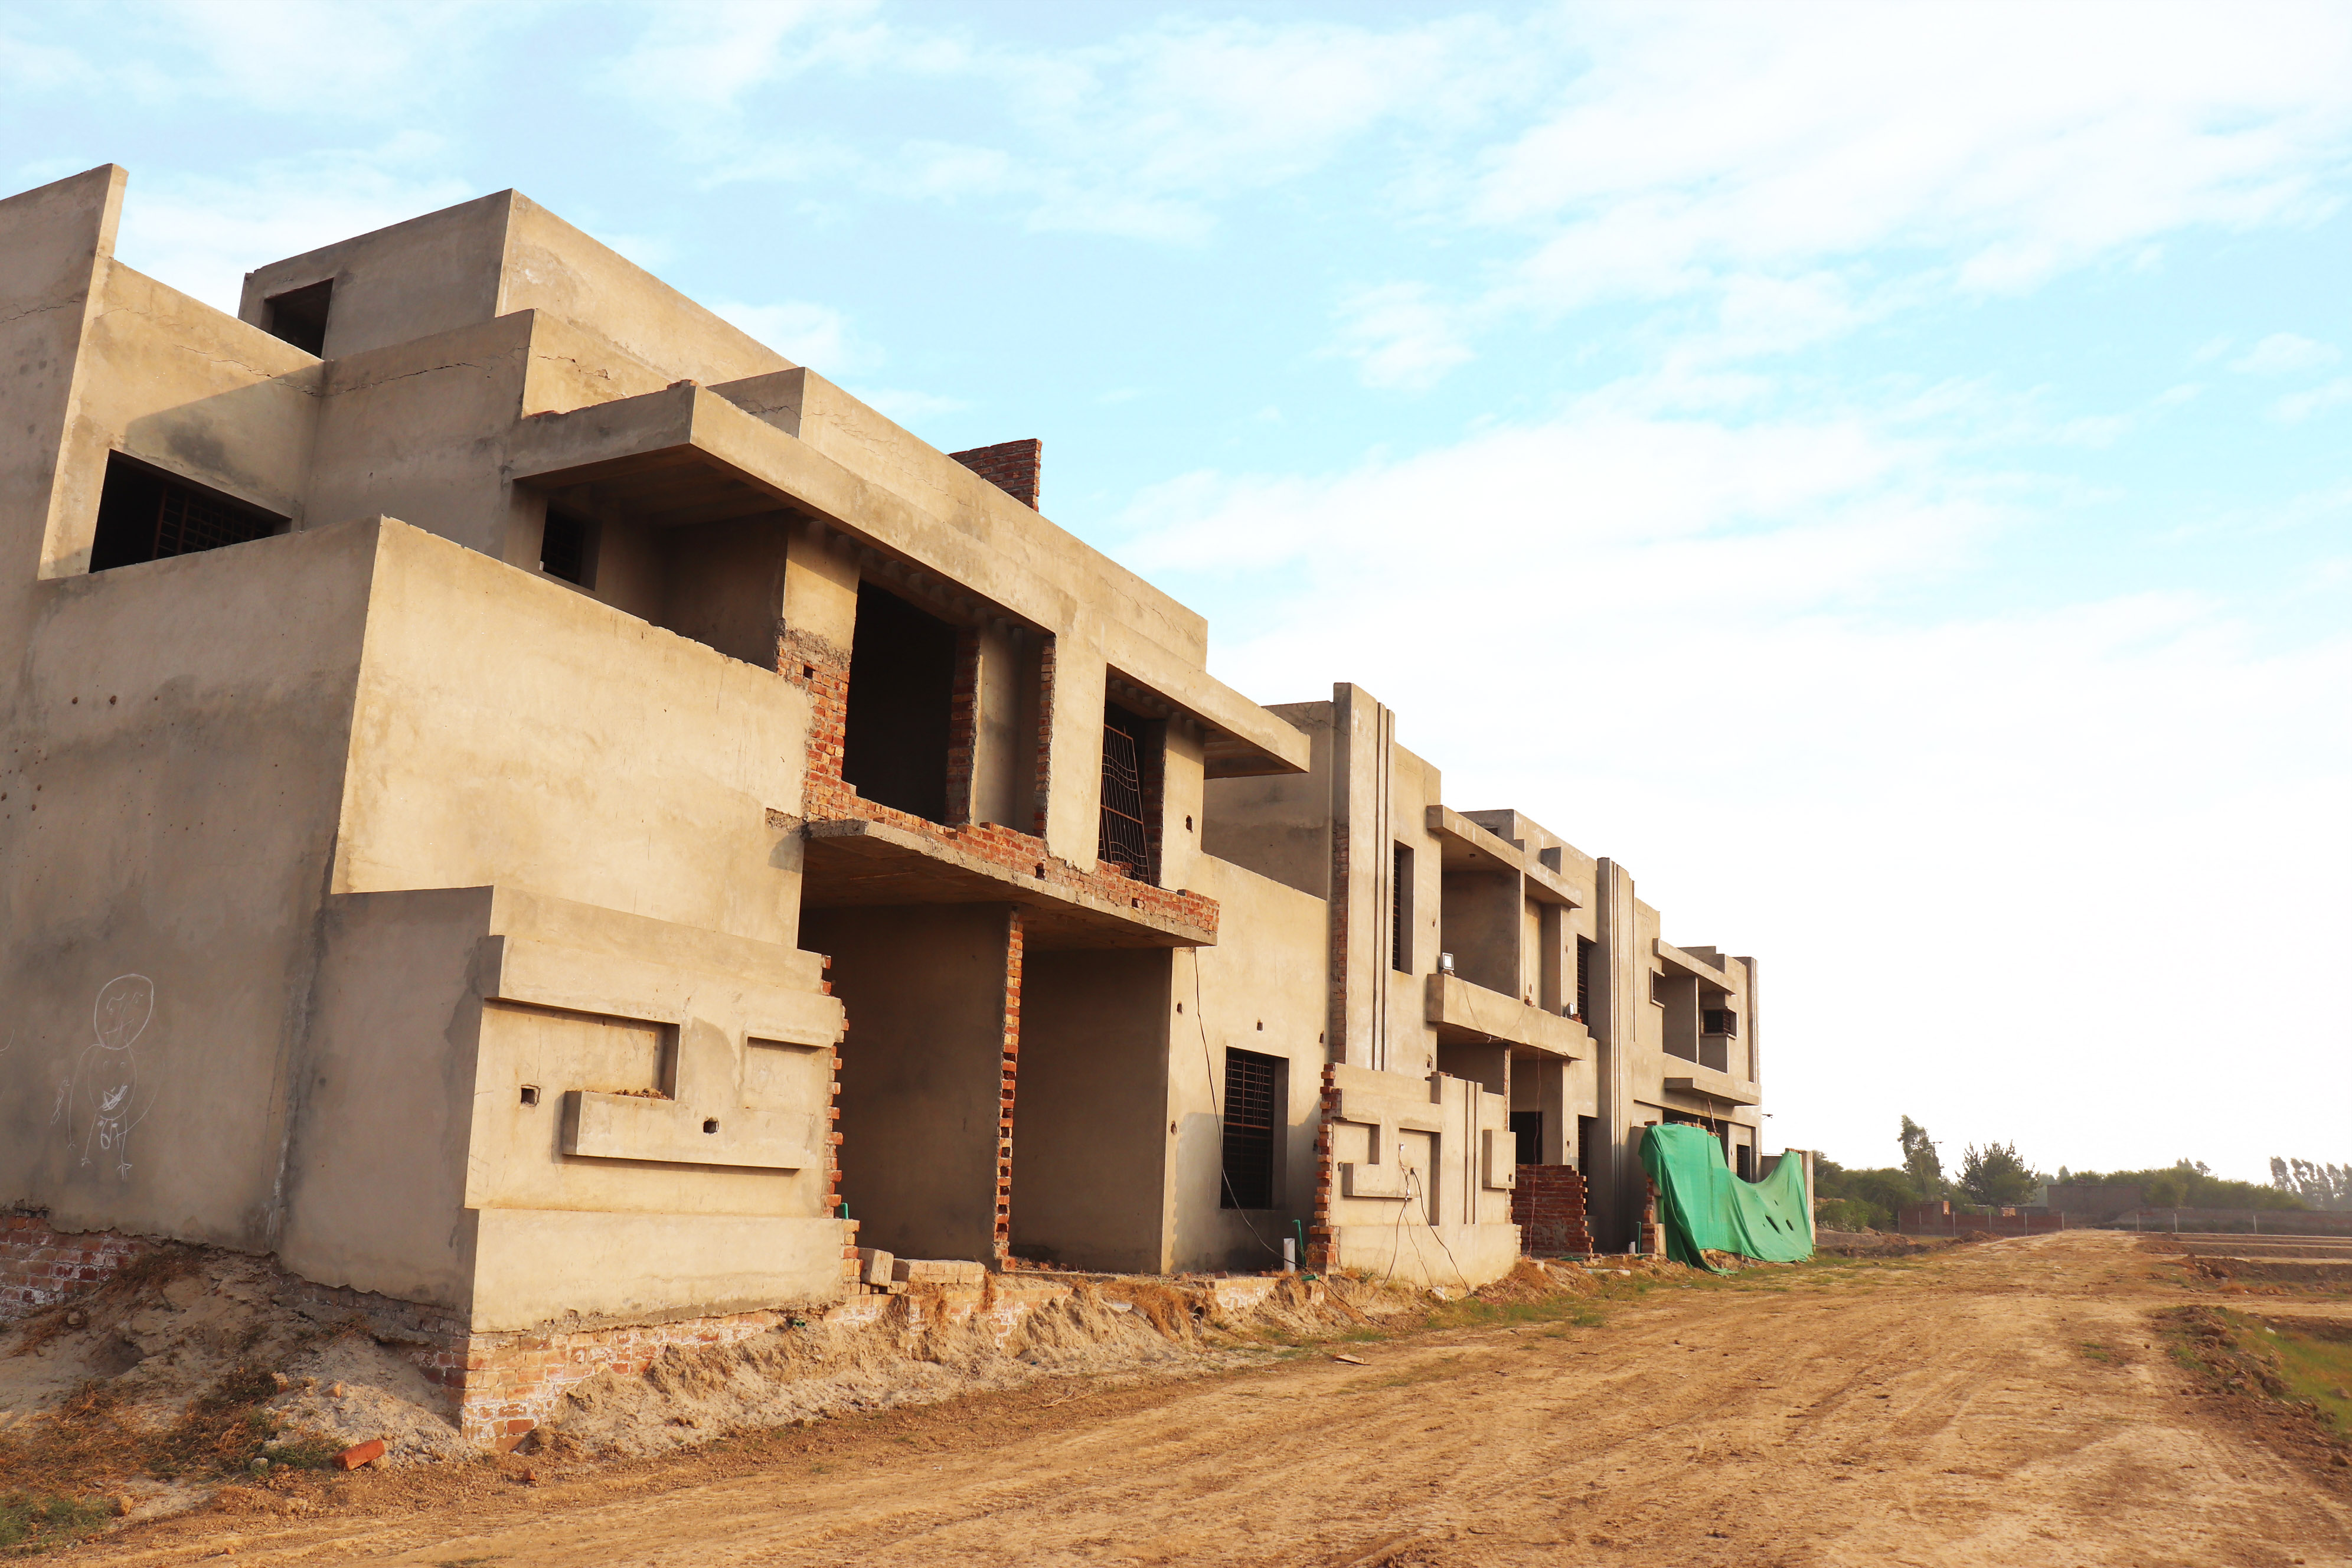 CONSTRUCTION OF MODEL HOUSES COMMENCES IN SAFARI GARDEN HOUSING SCHEME